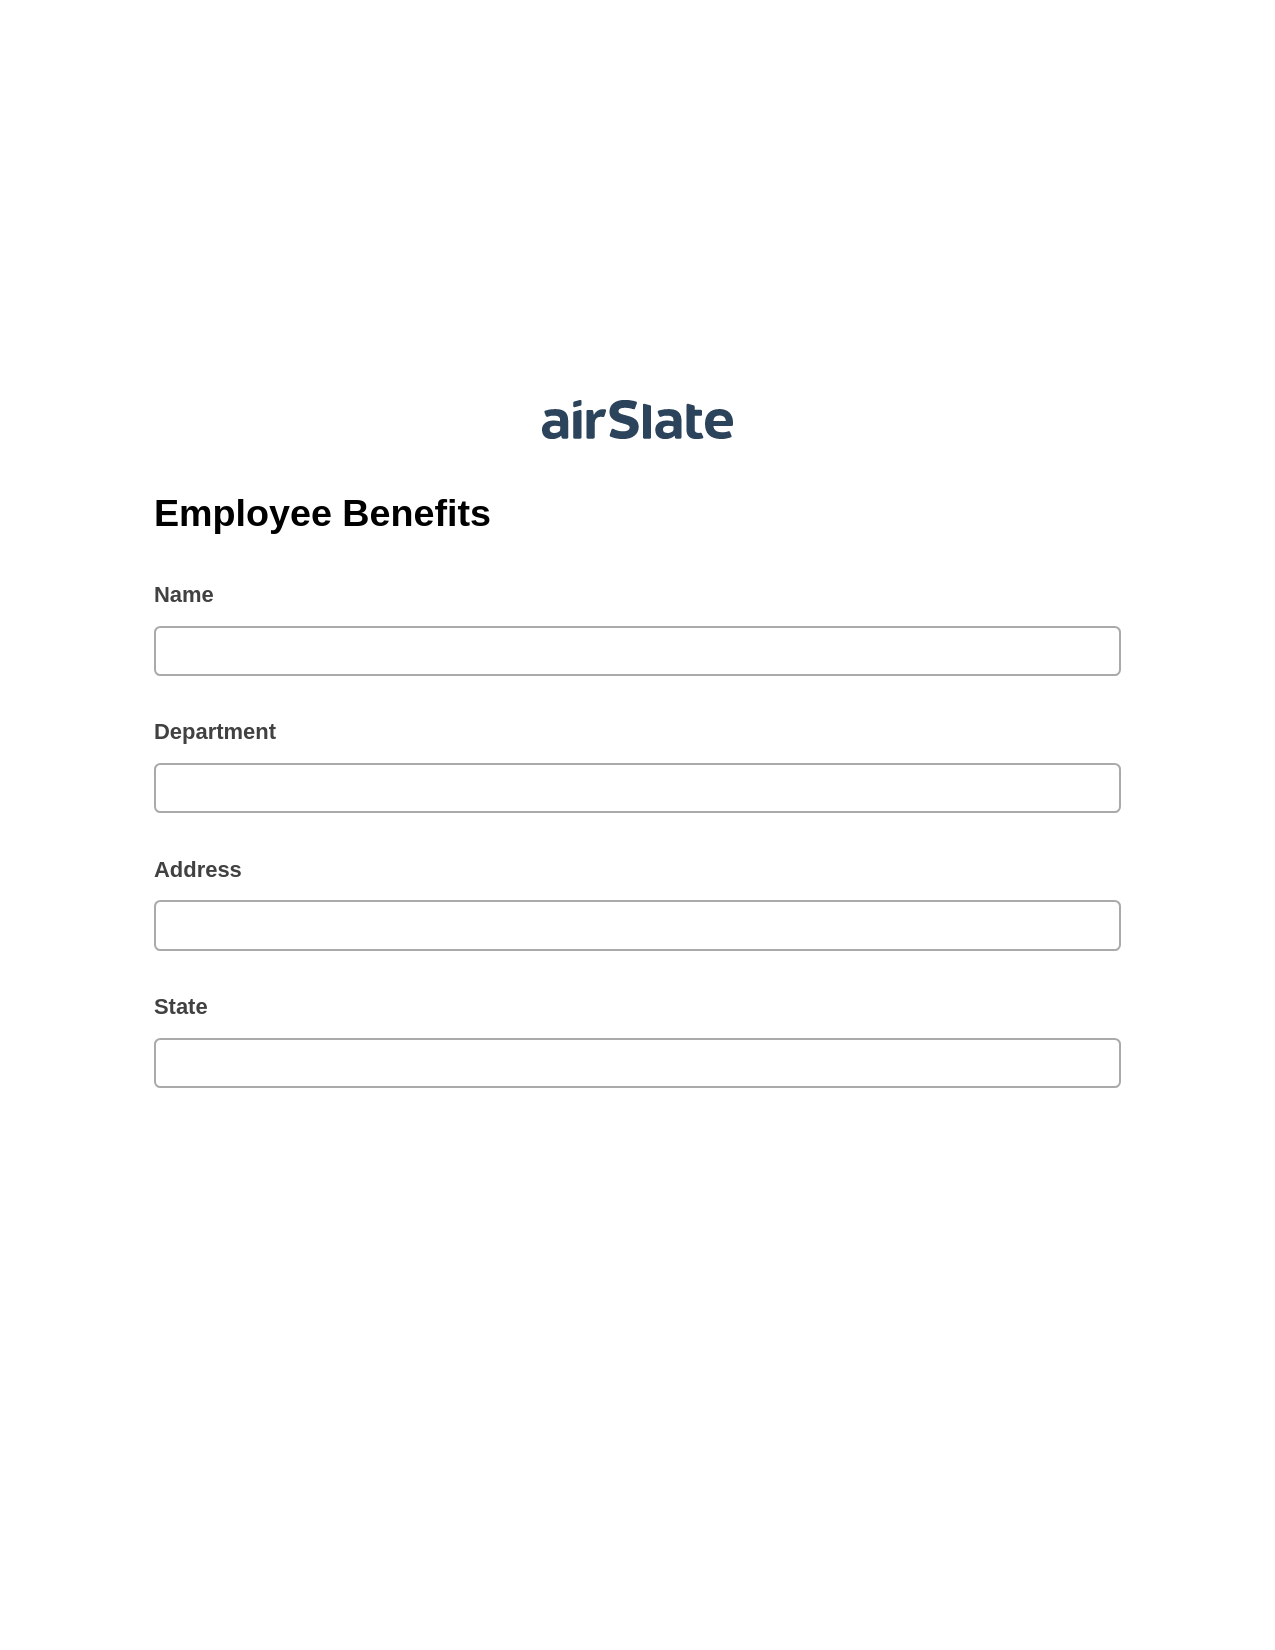 Employee Benefits Pre-fill Slate from MS Dynamics 365 Records Bot, Slack Notification Bot, OneDrive Bot